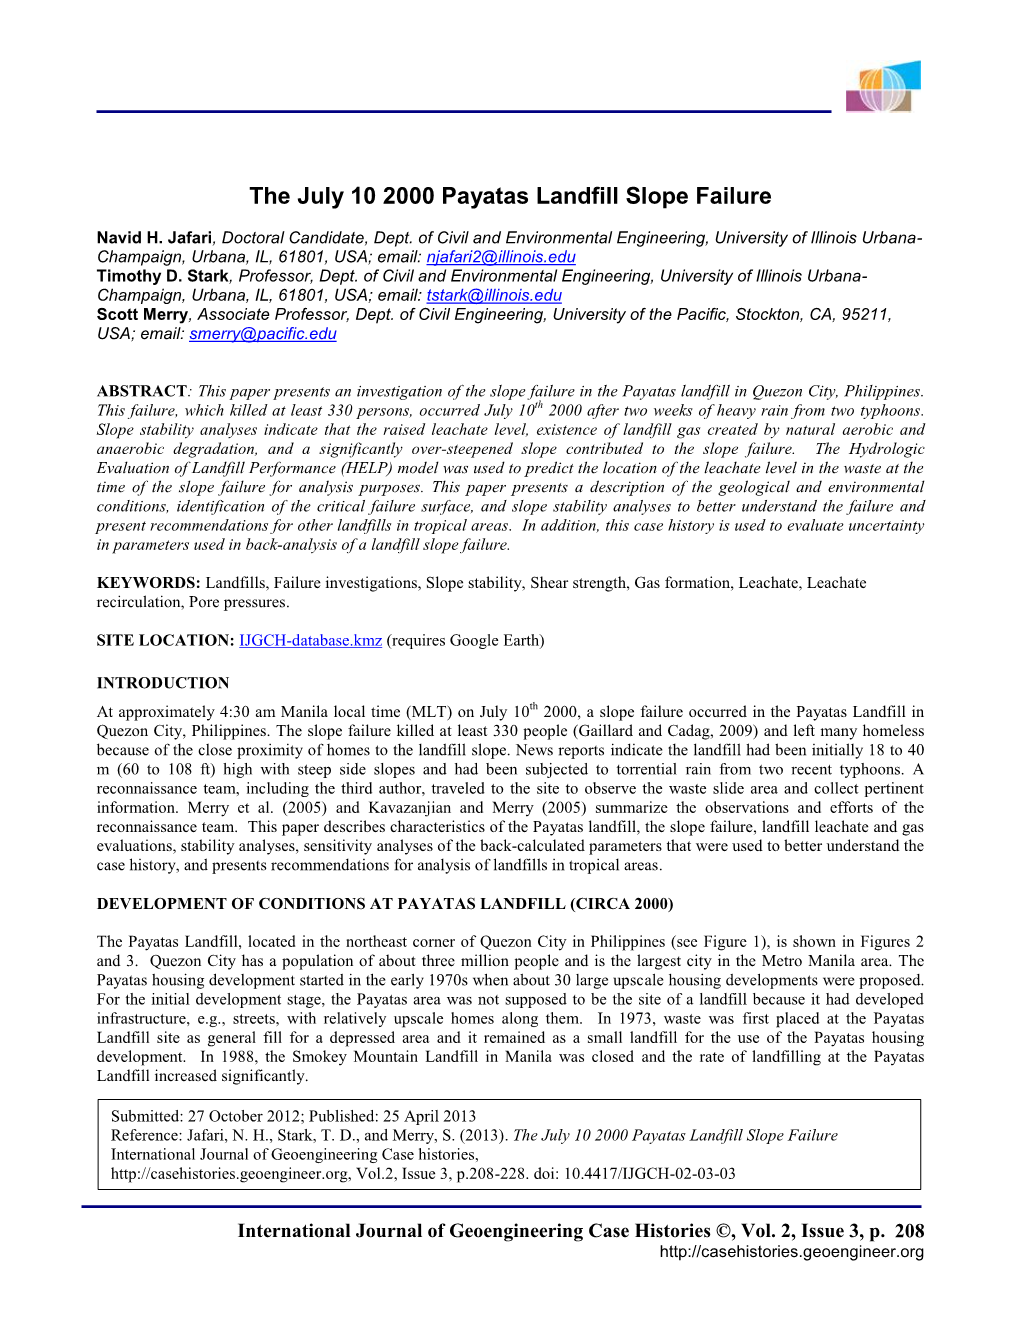 The July 10 2000 Payatas Landfill Slope Failure